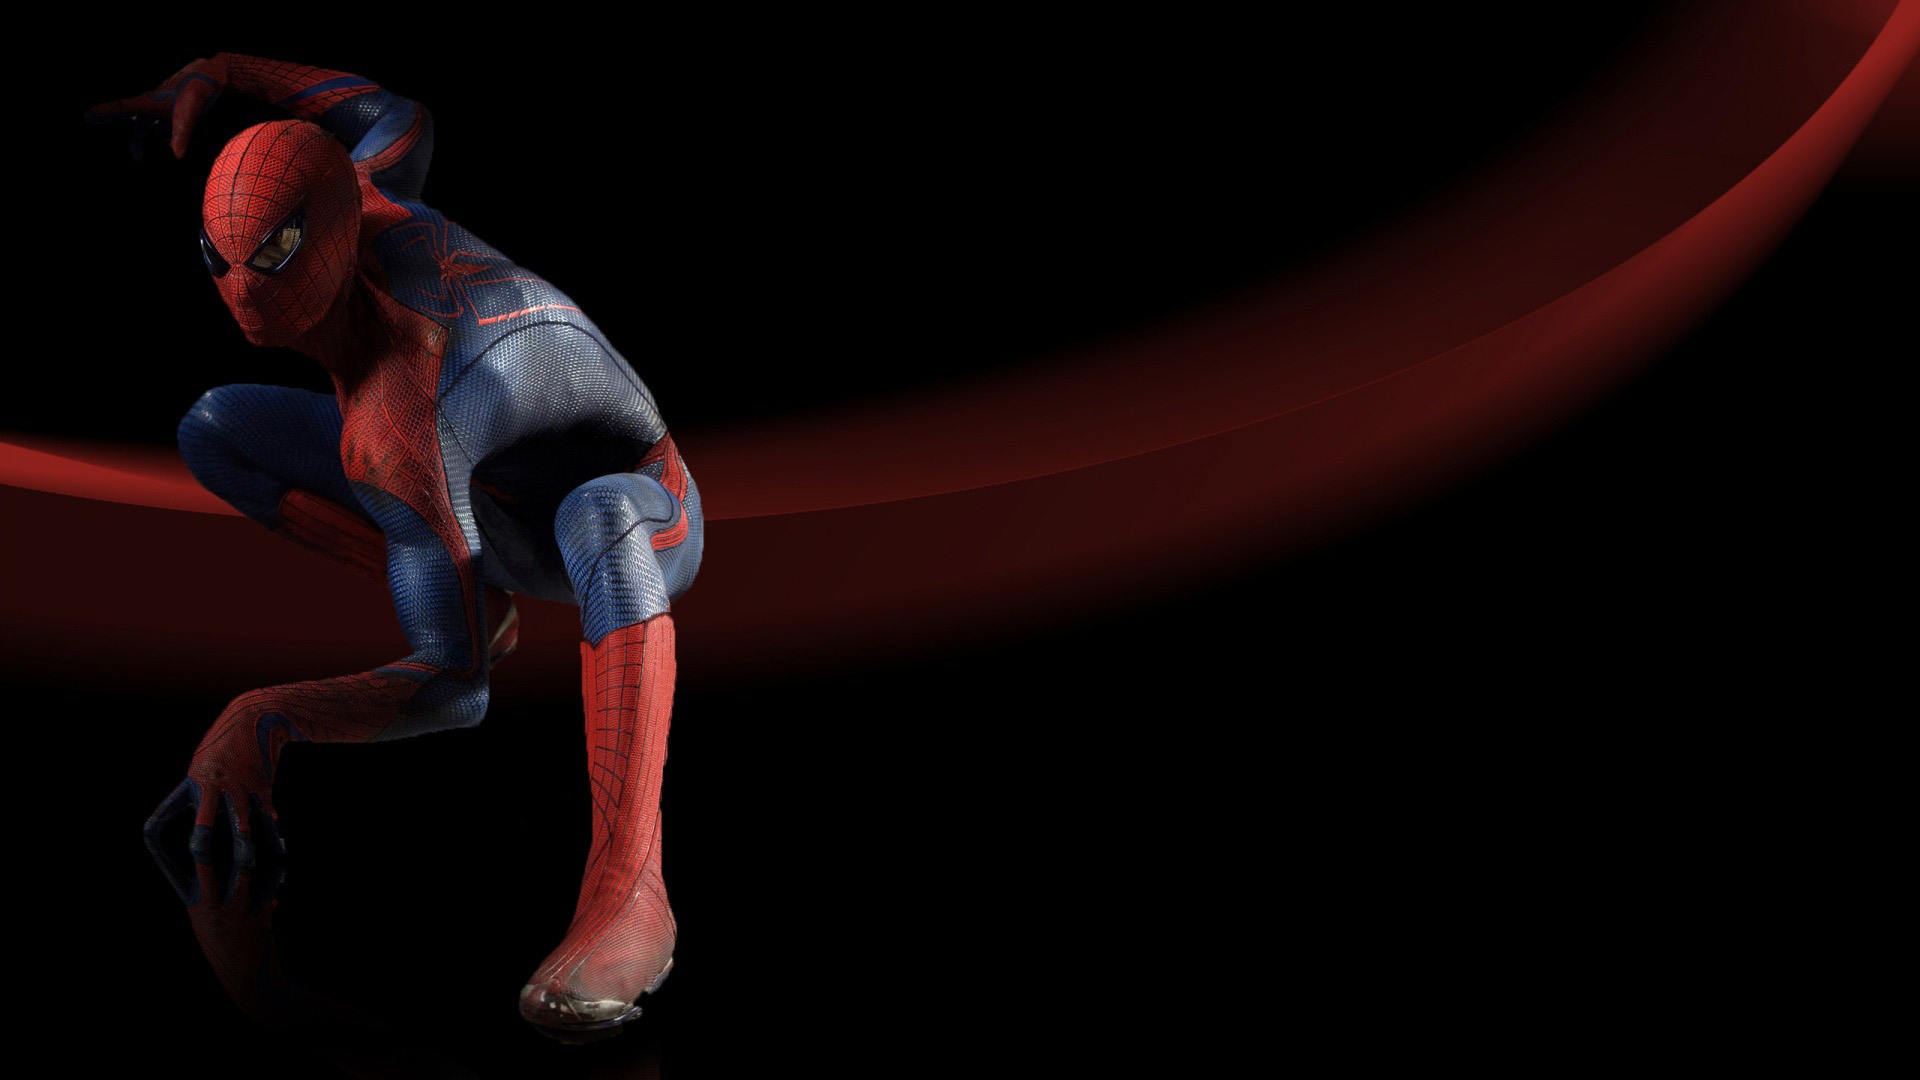 The Amazing Spider-Man 2012 驚奇蜘蛛俠2012 壁紙專輯 #12 - 1920x1080